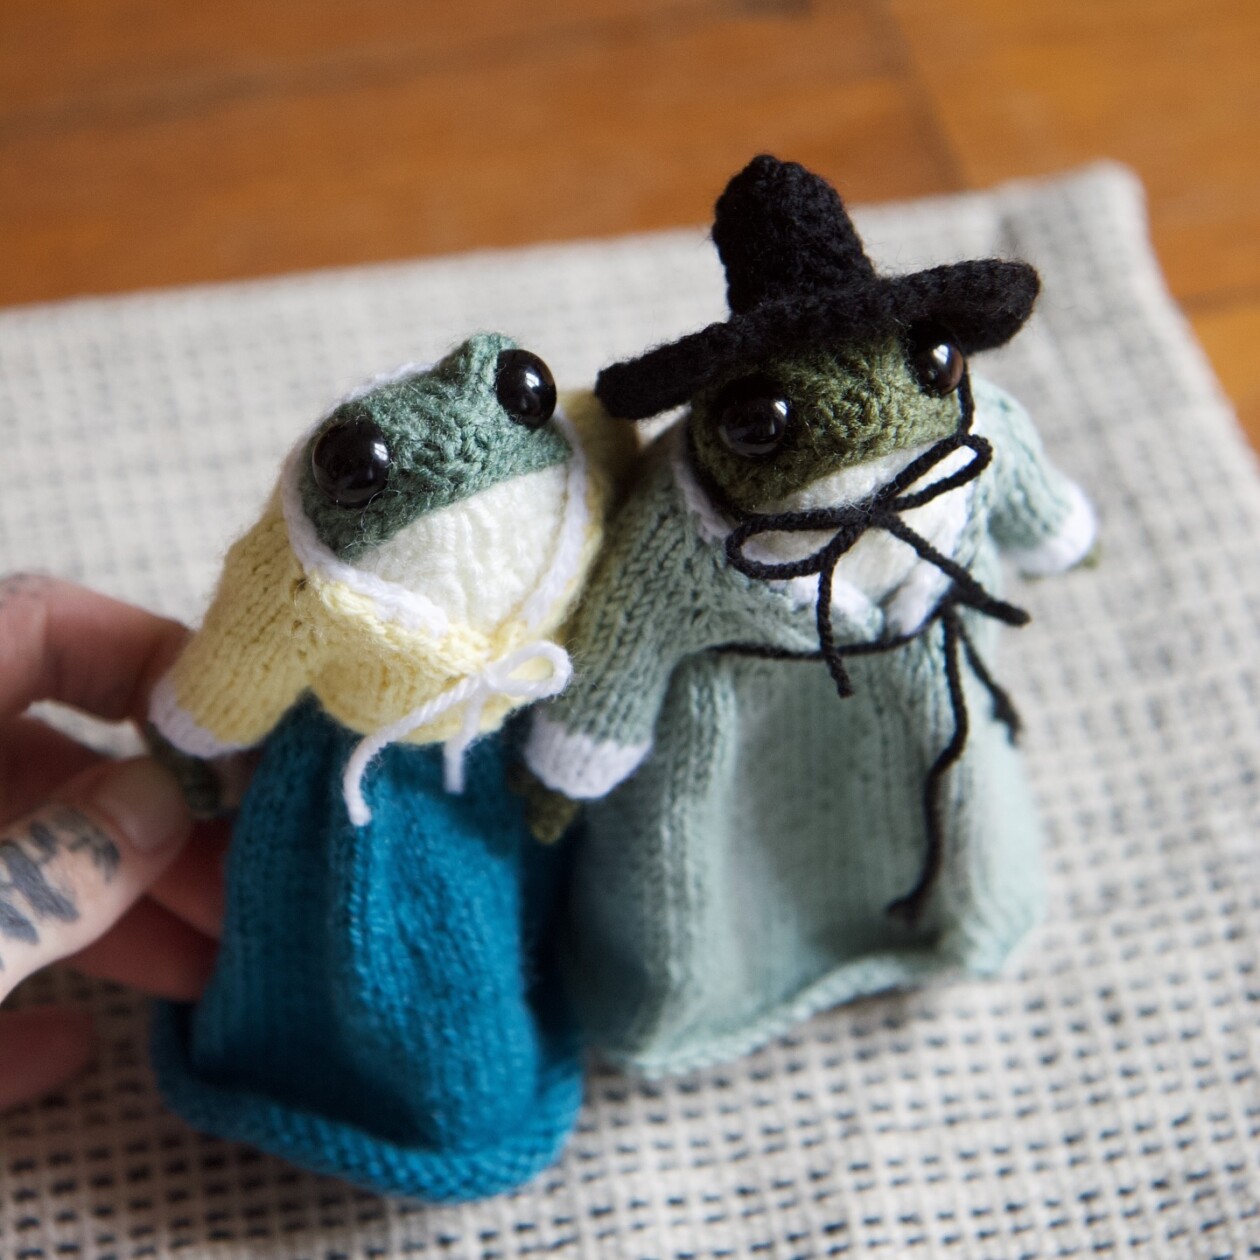 Enchanting Anthropomorphized Frog Crochet Patterns By Elliot (4)